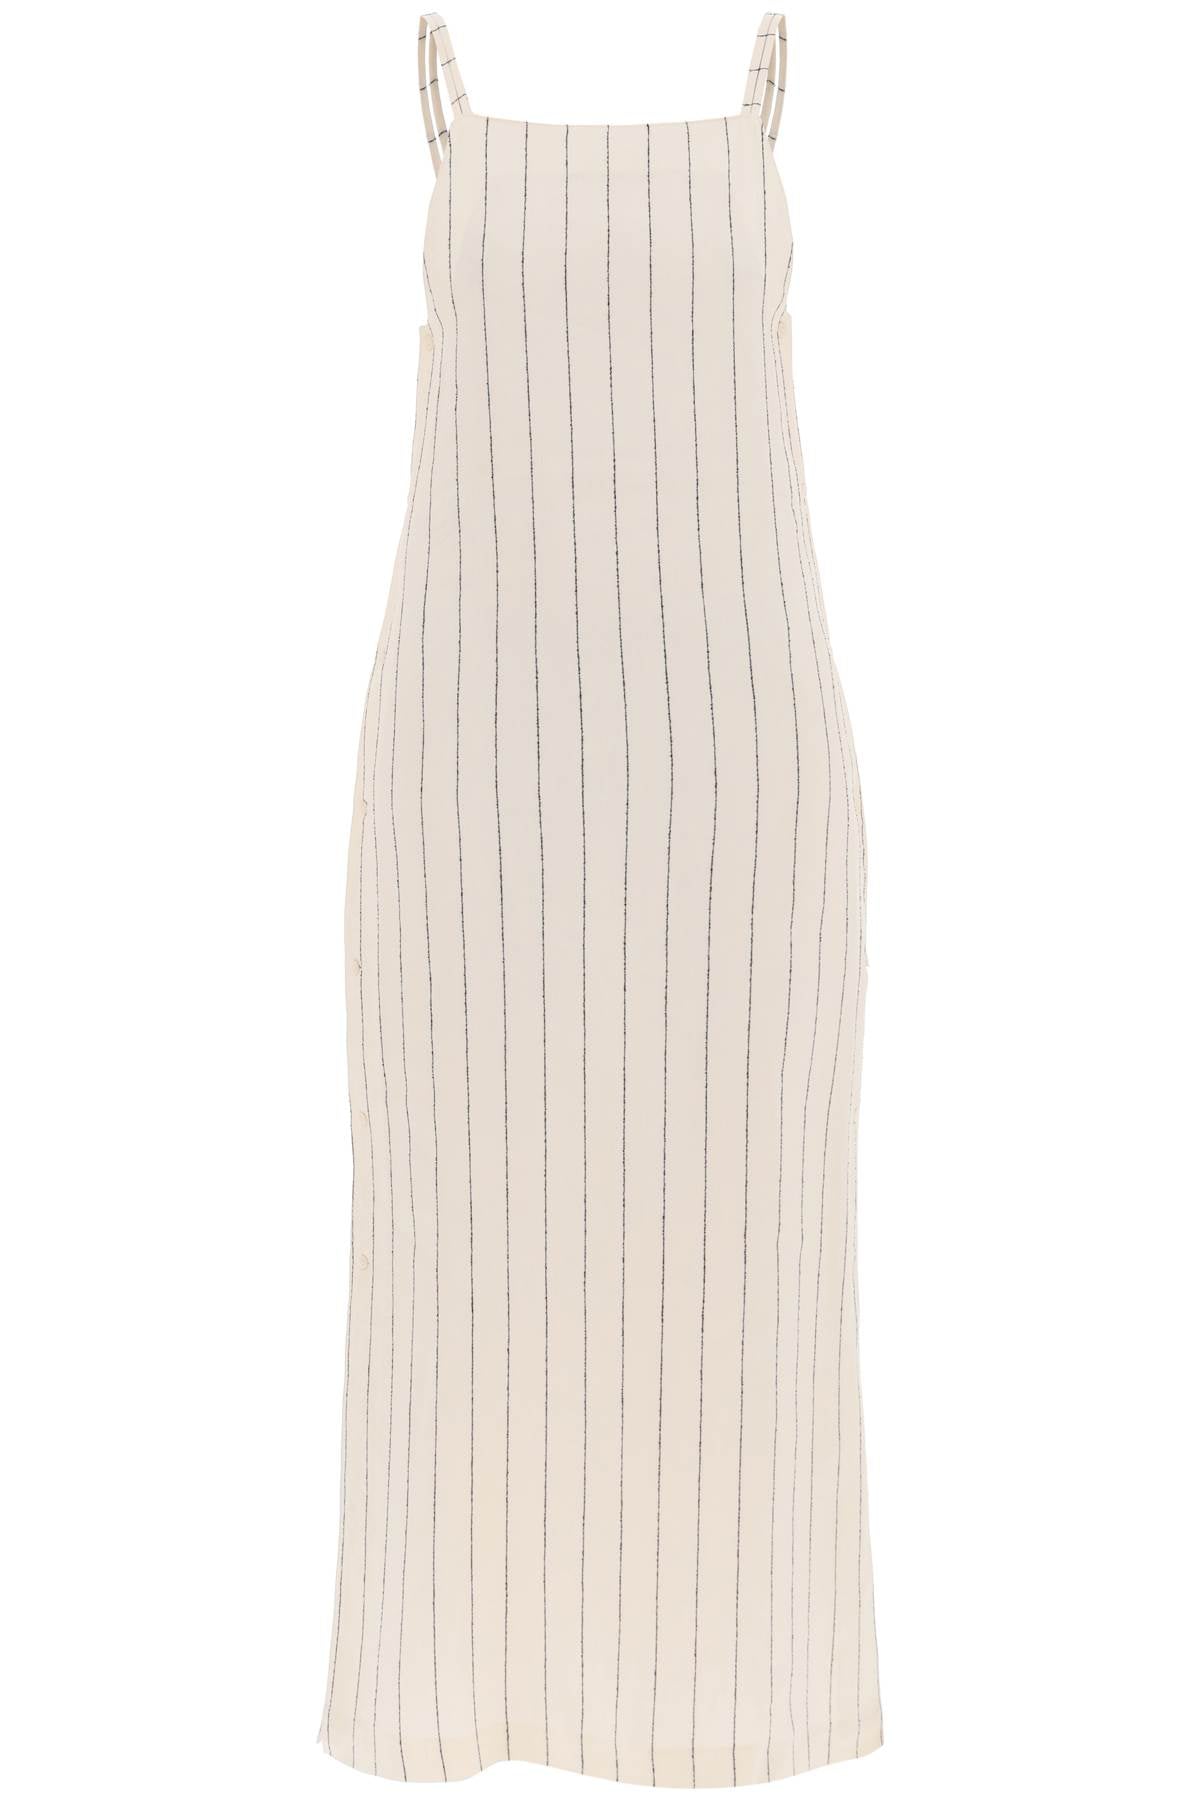 Loulou studio "striped sleeveless dress et-0